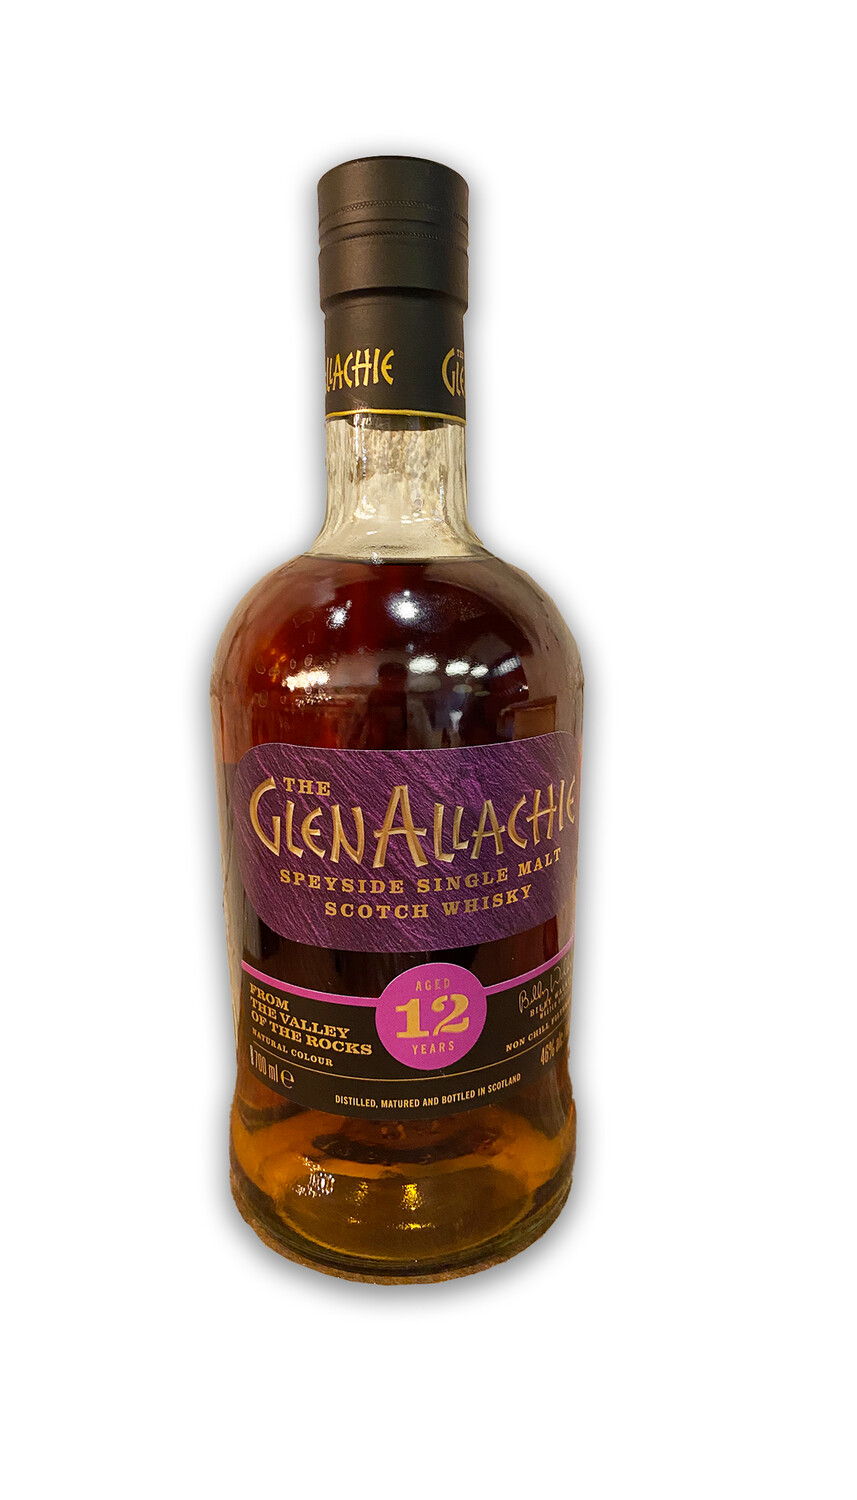 GlenAllachie Speyside single malt Scotch WHISKY